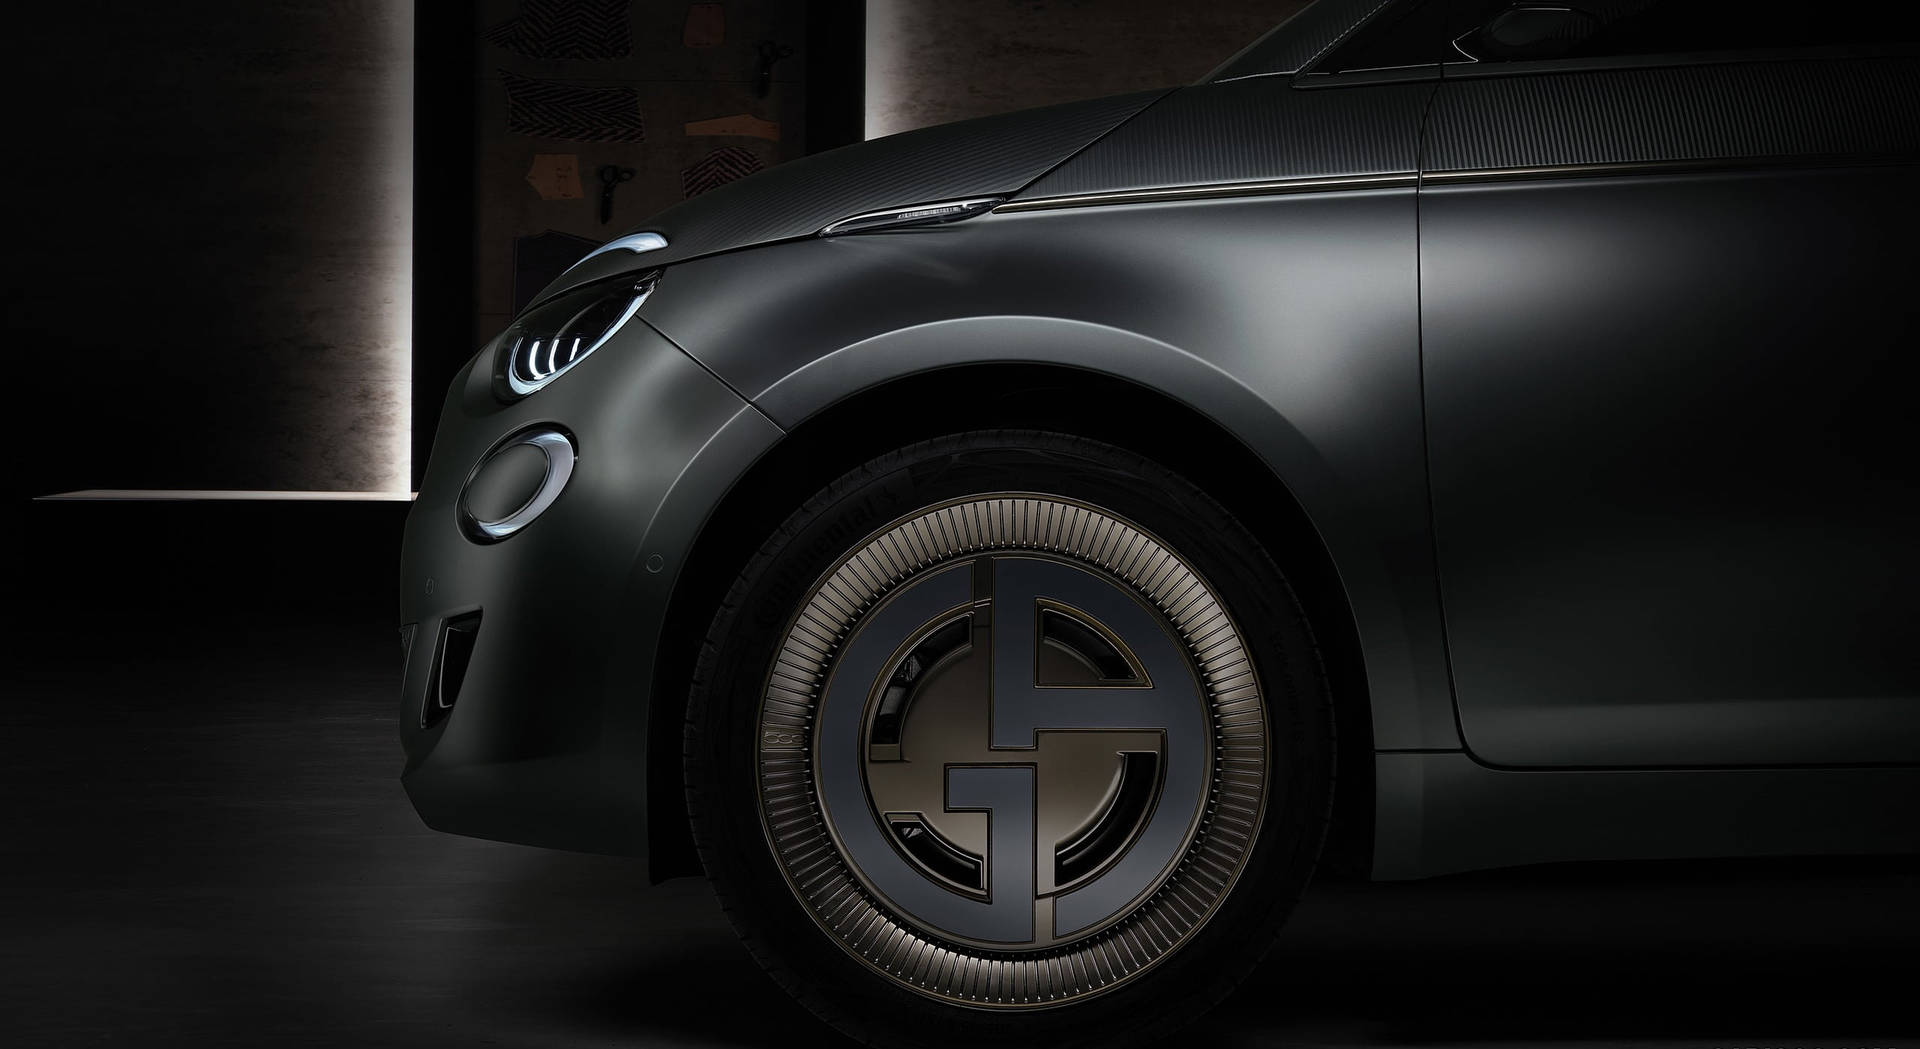 Giorgio Armani Logo On Car Wheel Wallpaper